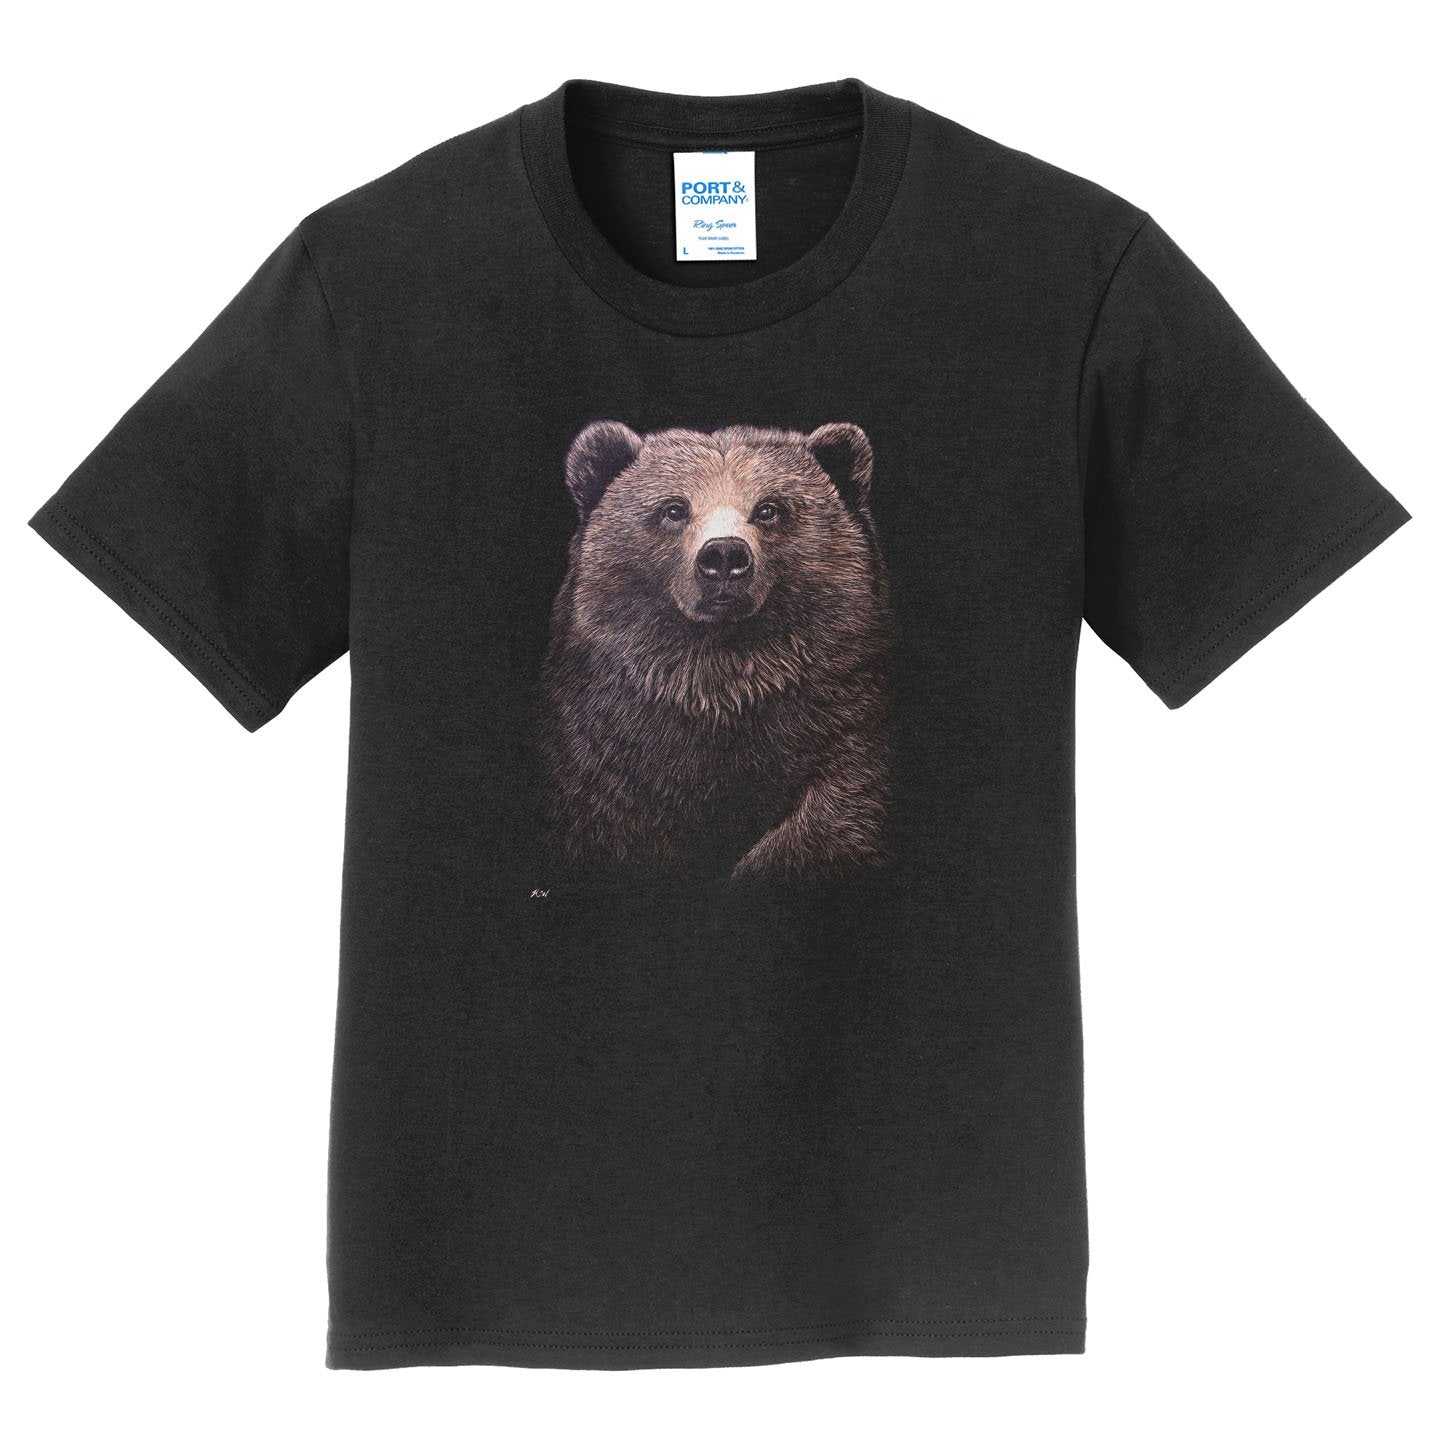 Grizzly Bear on Black - Kids' Unisex T-Shirt